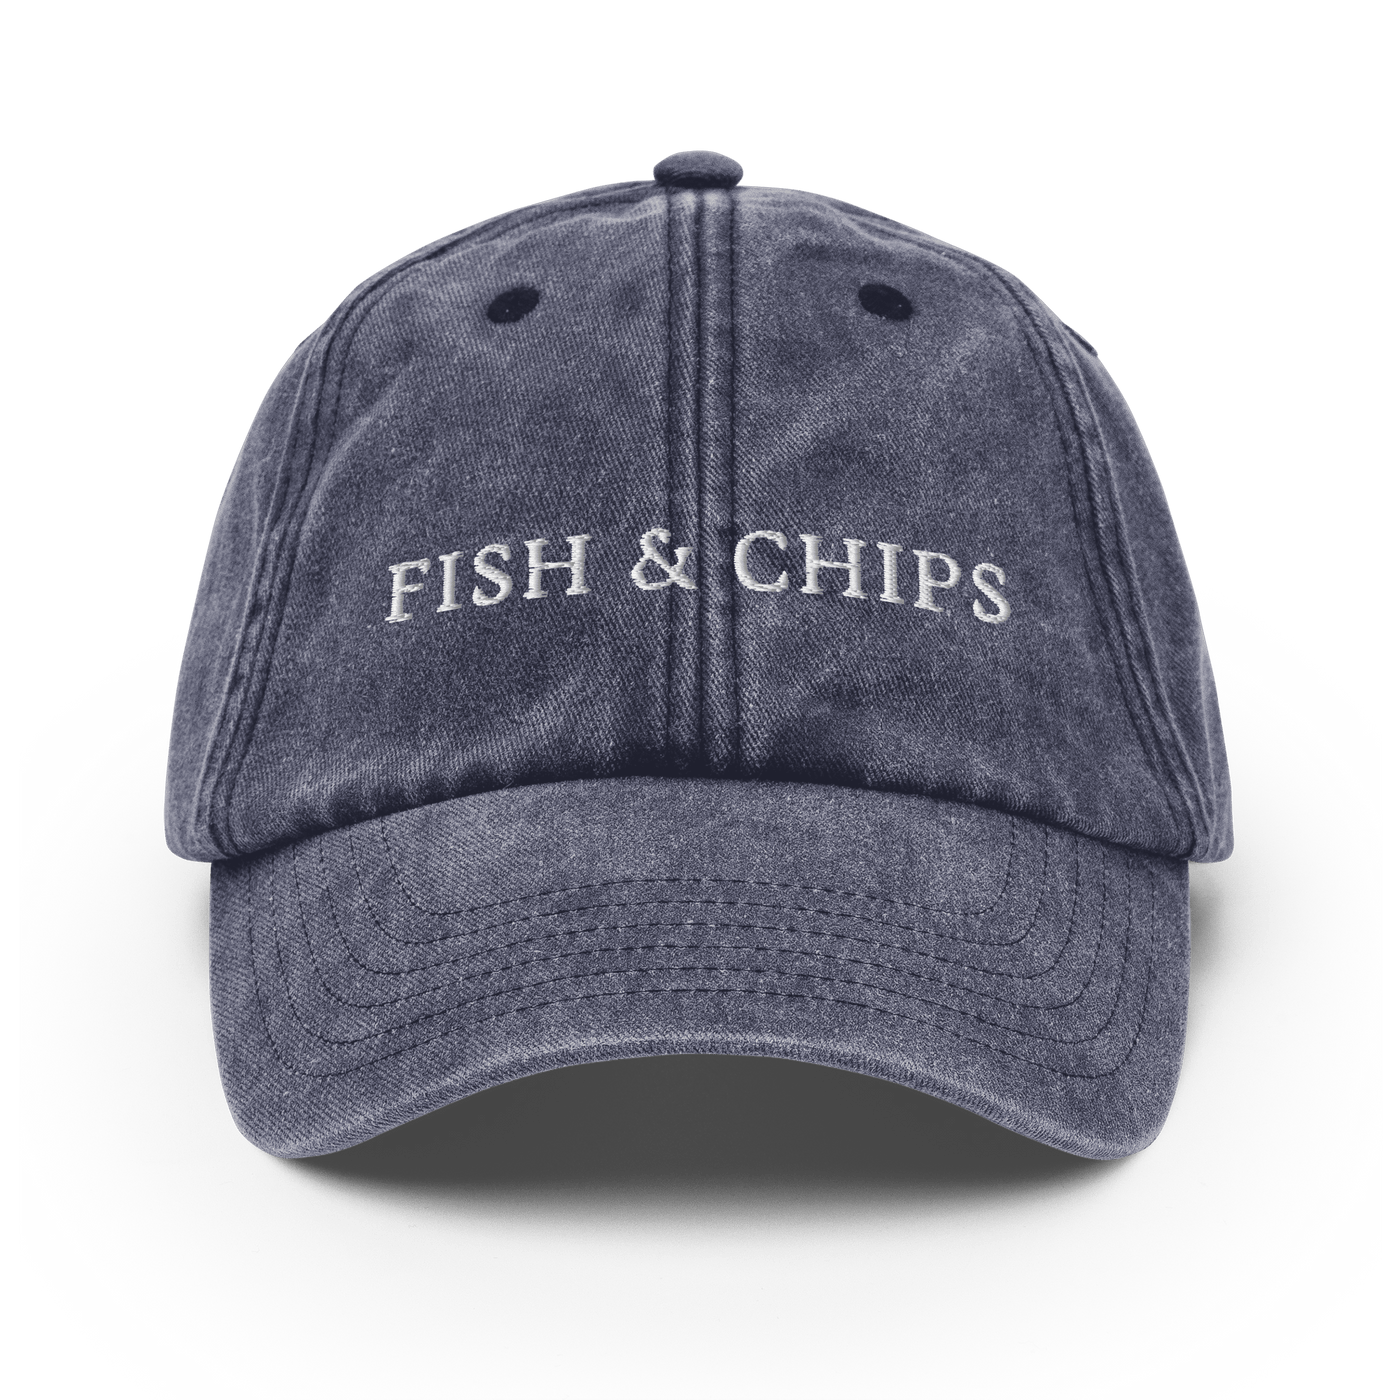 Fish & Chips Vintage Hat - Vintage Denim - - Just Another Cap Store